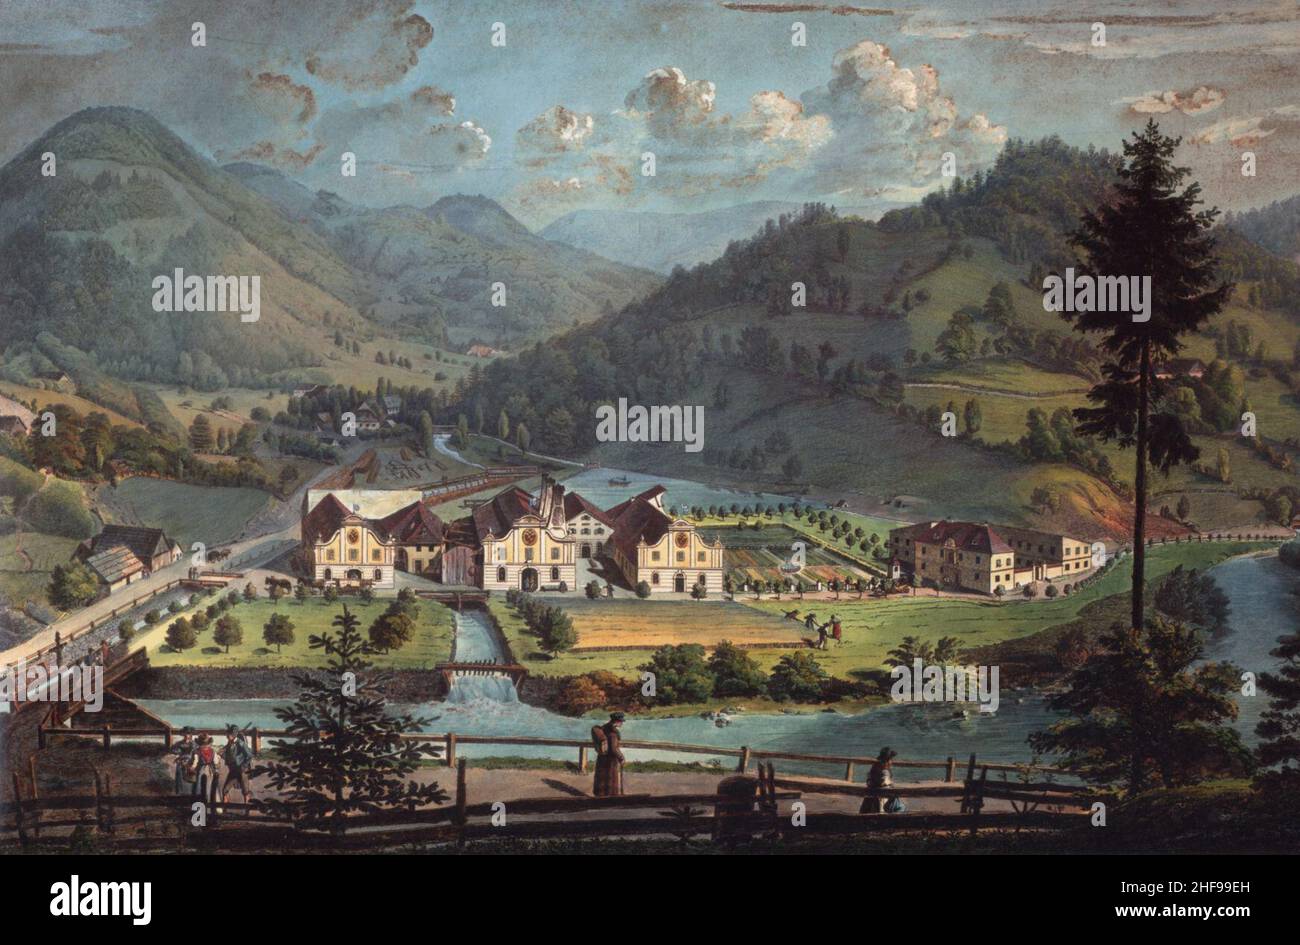 Scheibbs Toepperfabrik 1827 by Franz Barbarini. Stock Photo